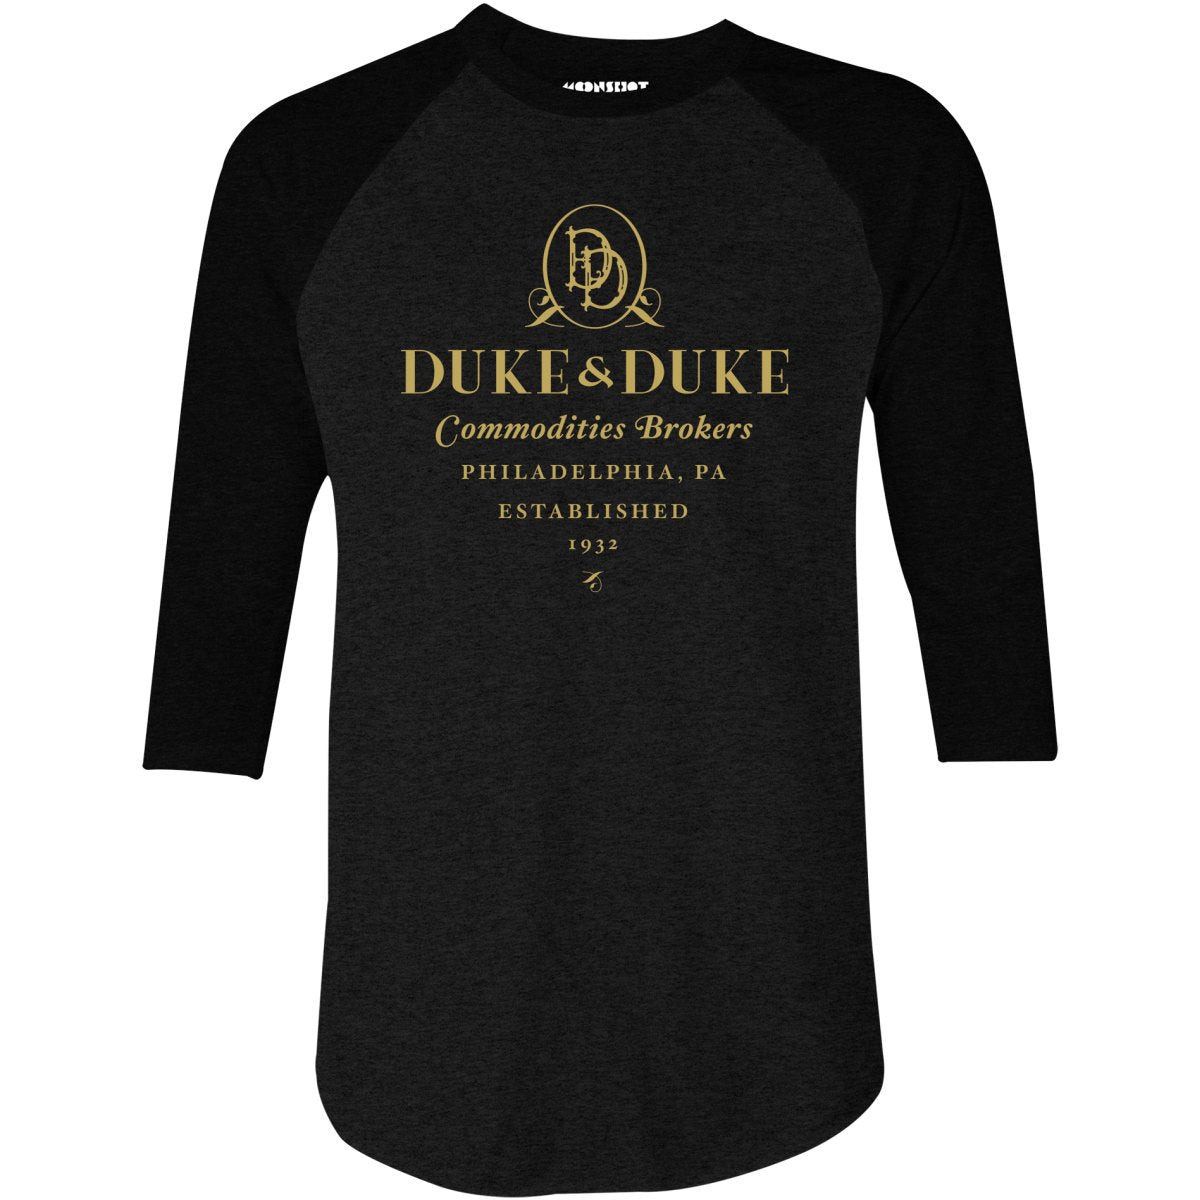 Duke & Duke Commodities Brokers - 3/4 Sleeve Raglan T-Shirt